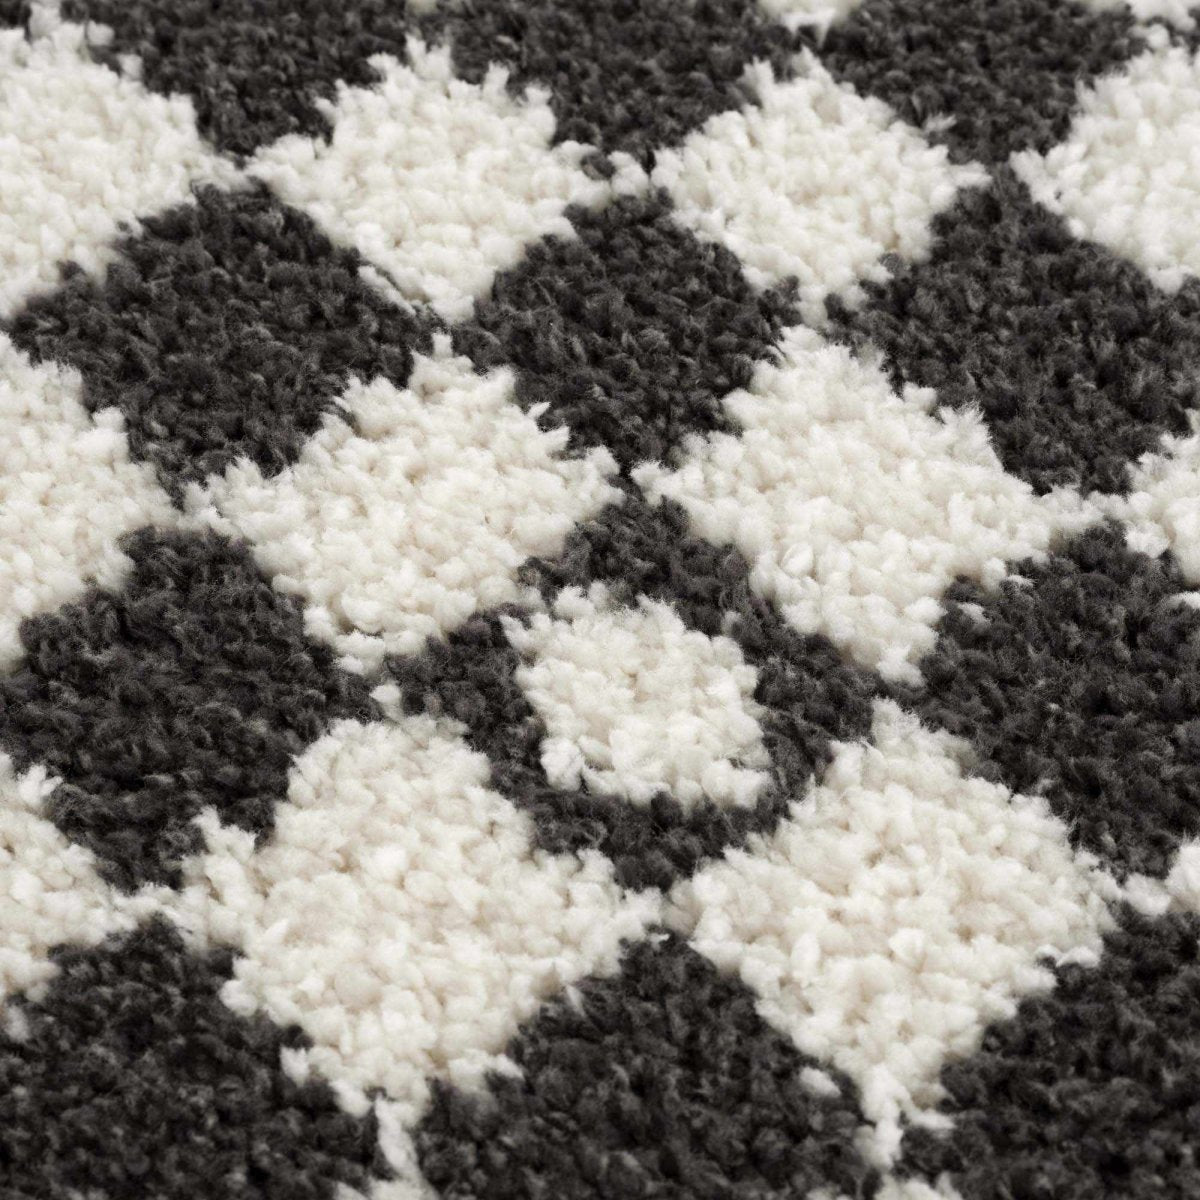 Hauteloom Kieu Black & White Checkered Area Rug - lily & onyx